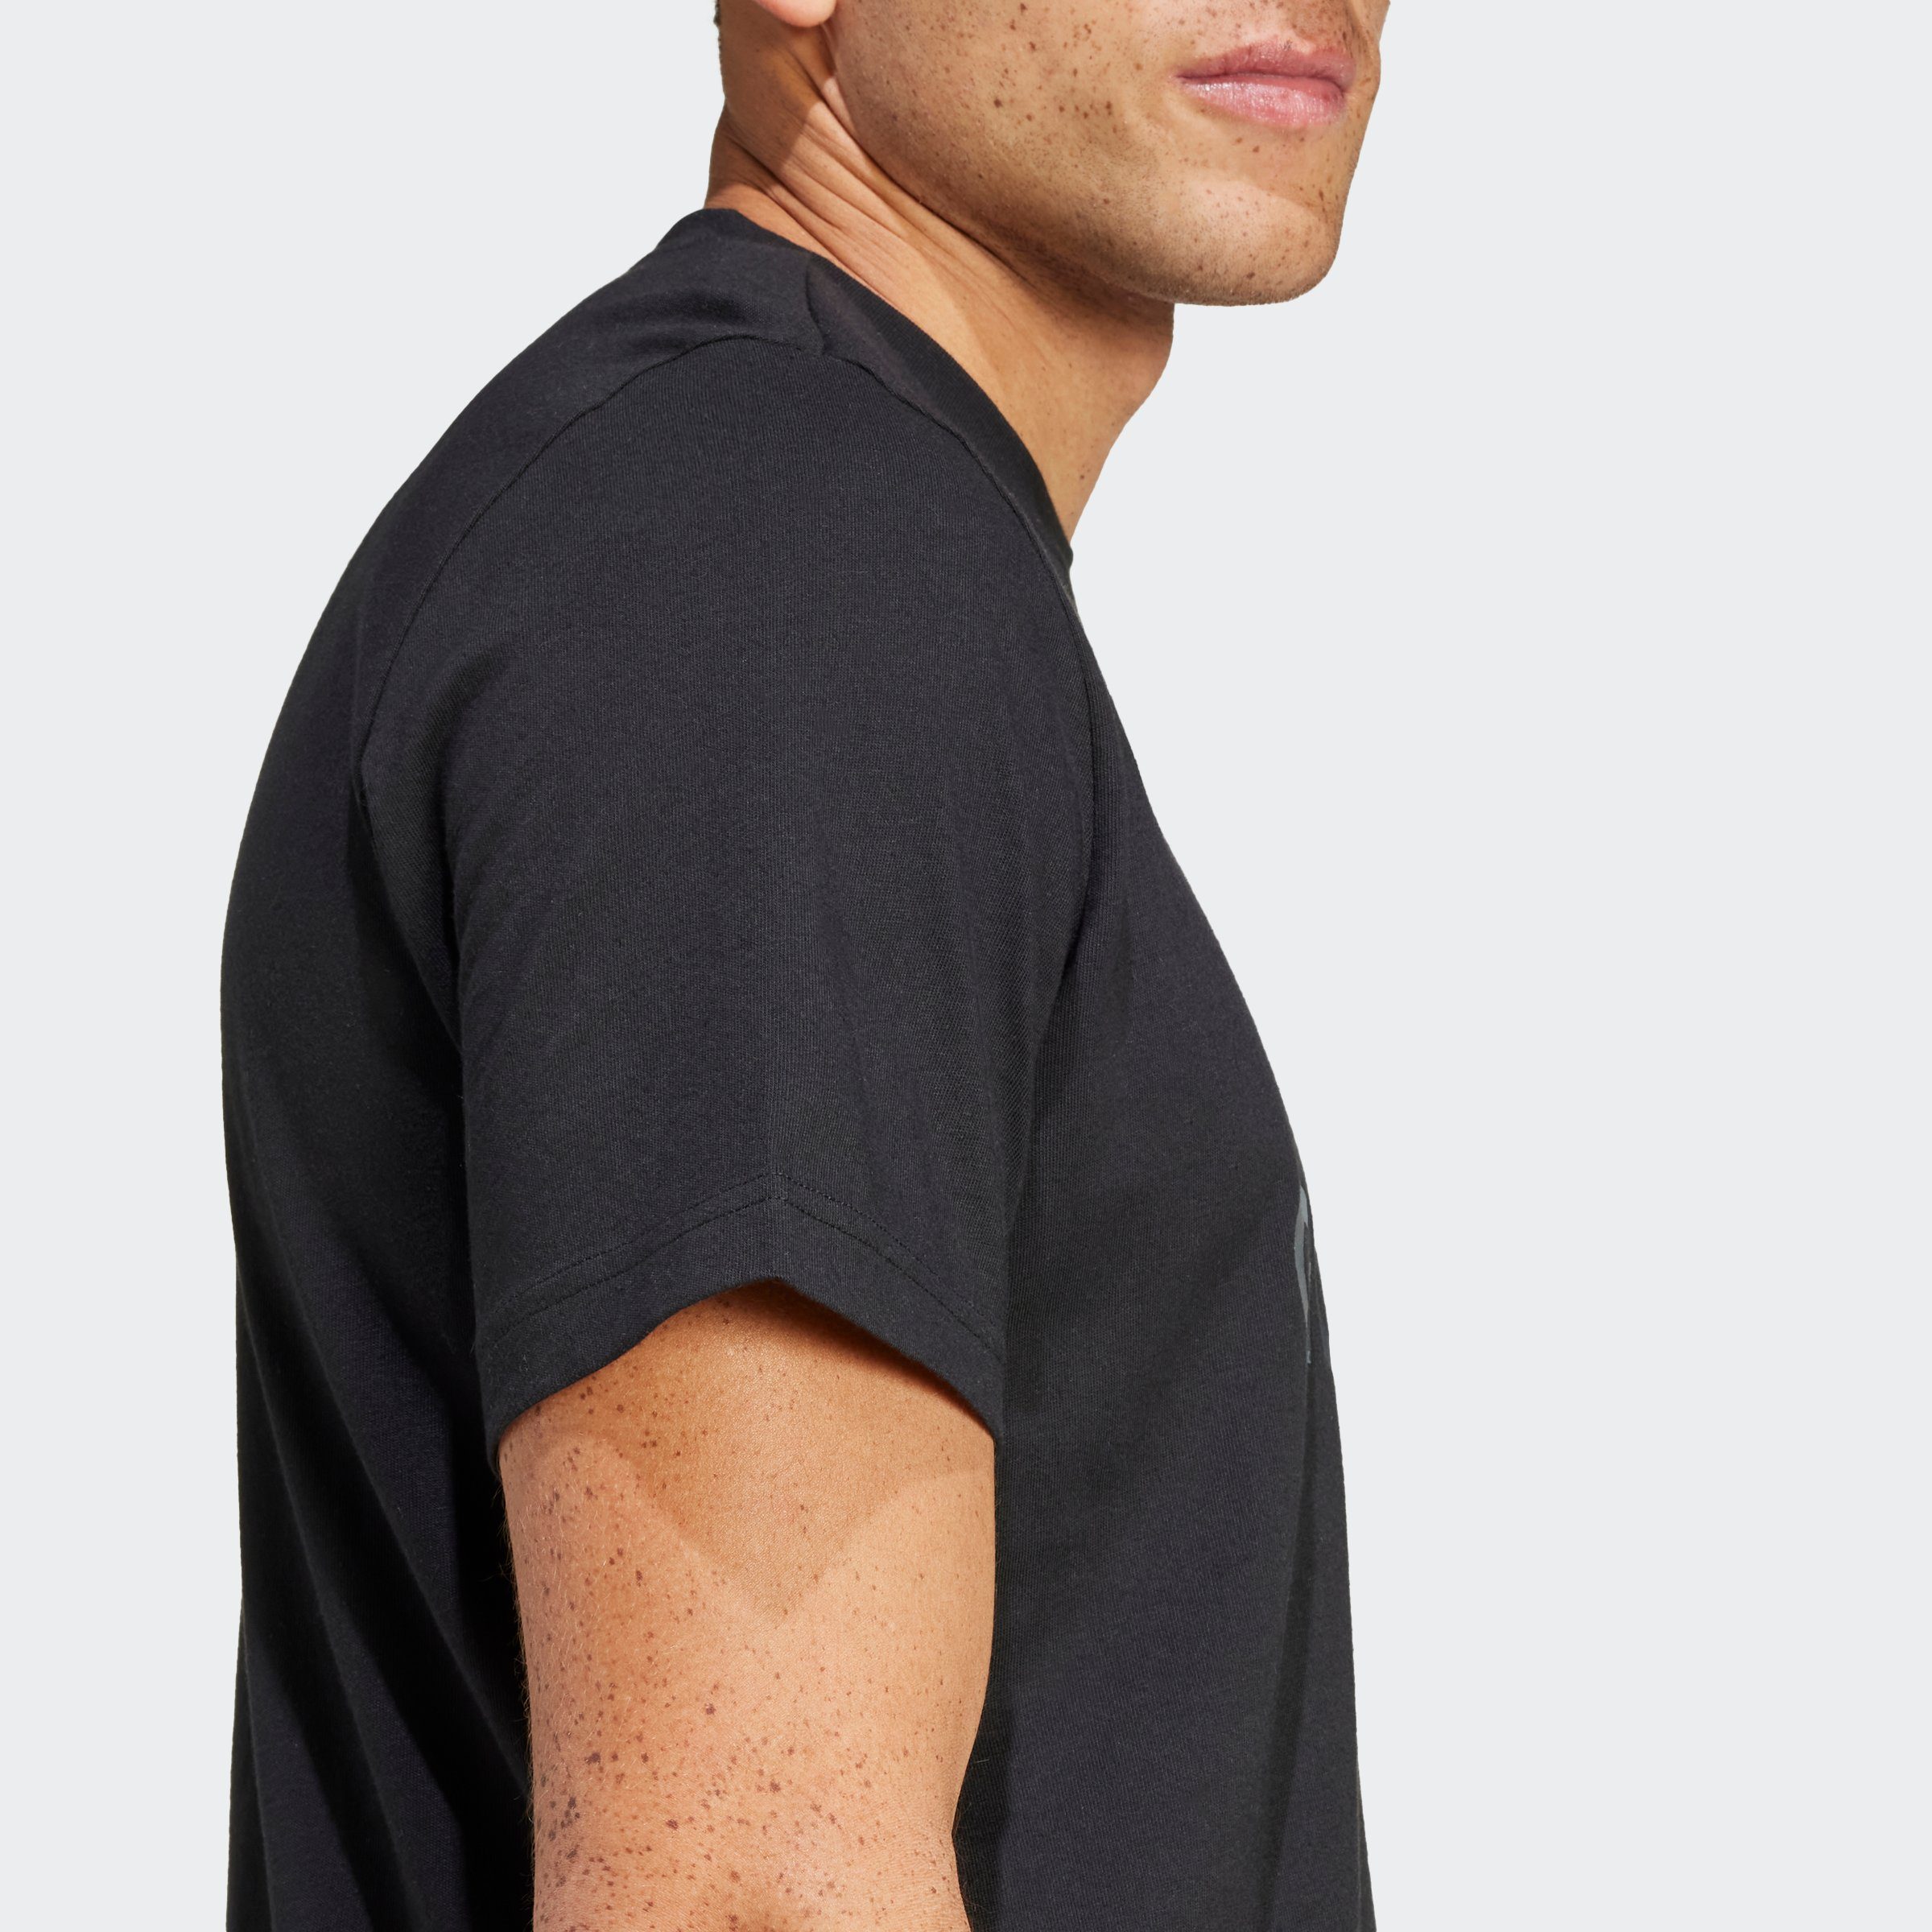 1 CAMO T-Shirt adidas G T BLACK M Sportswear